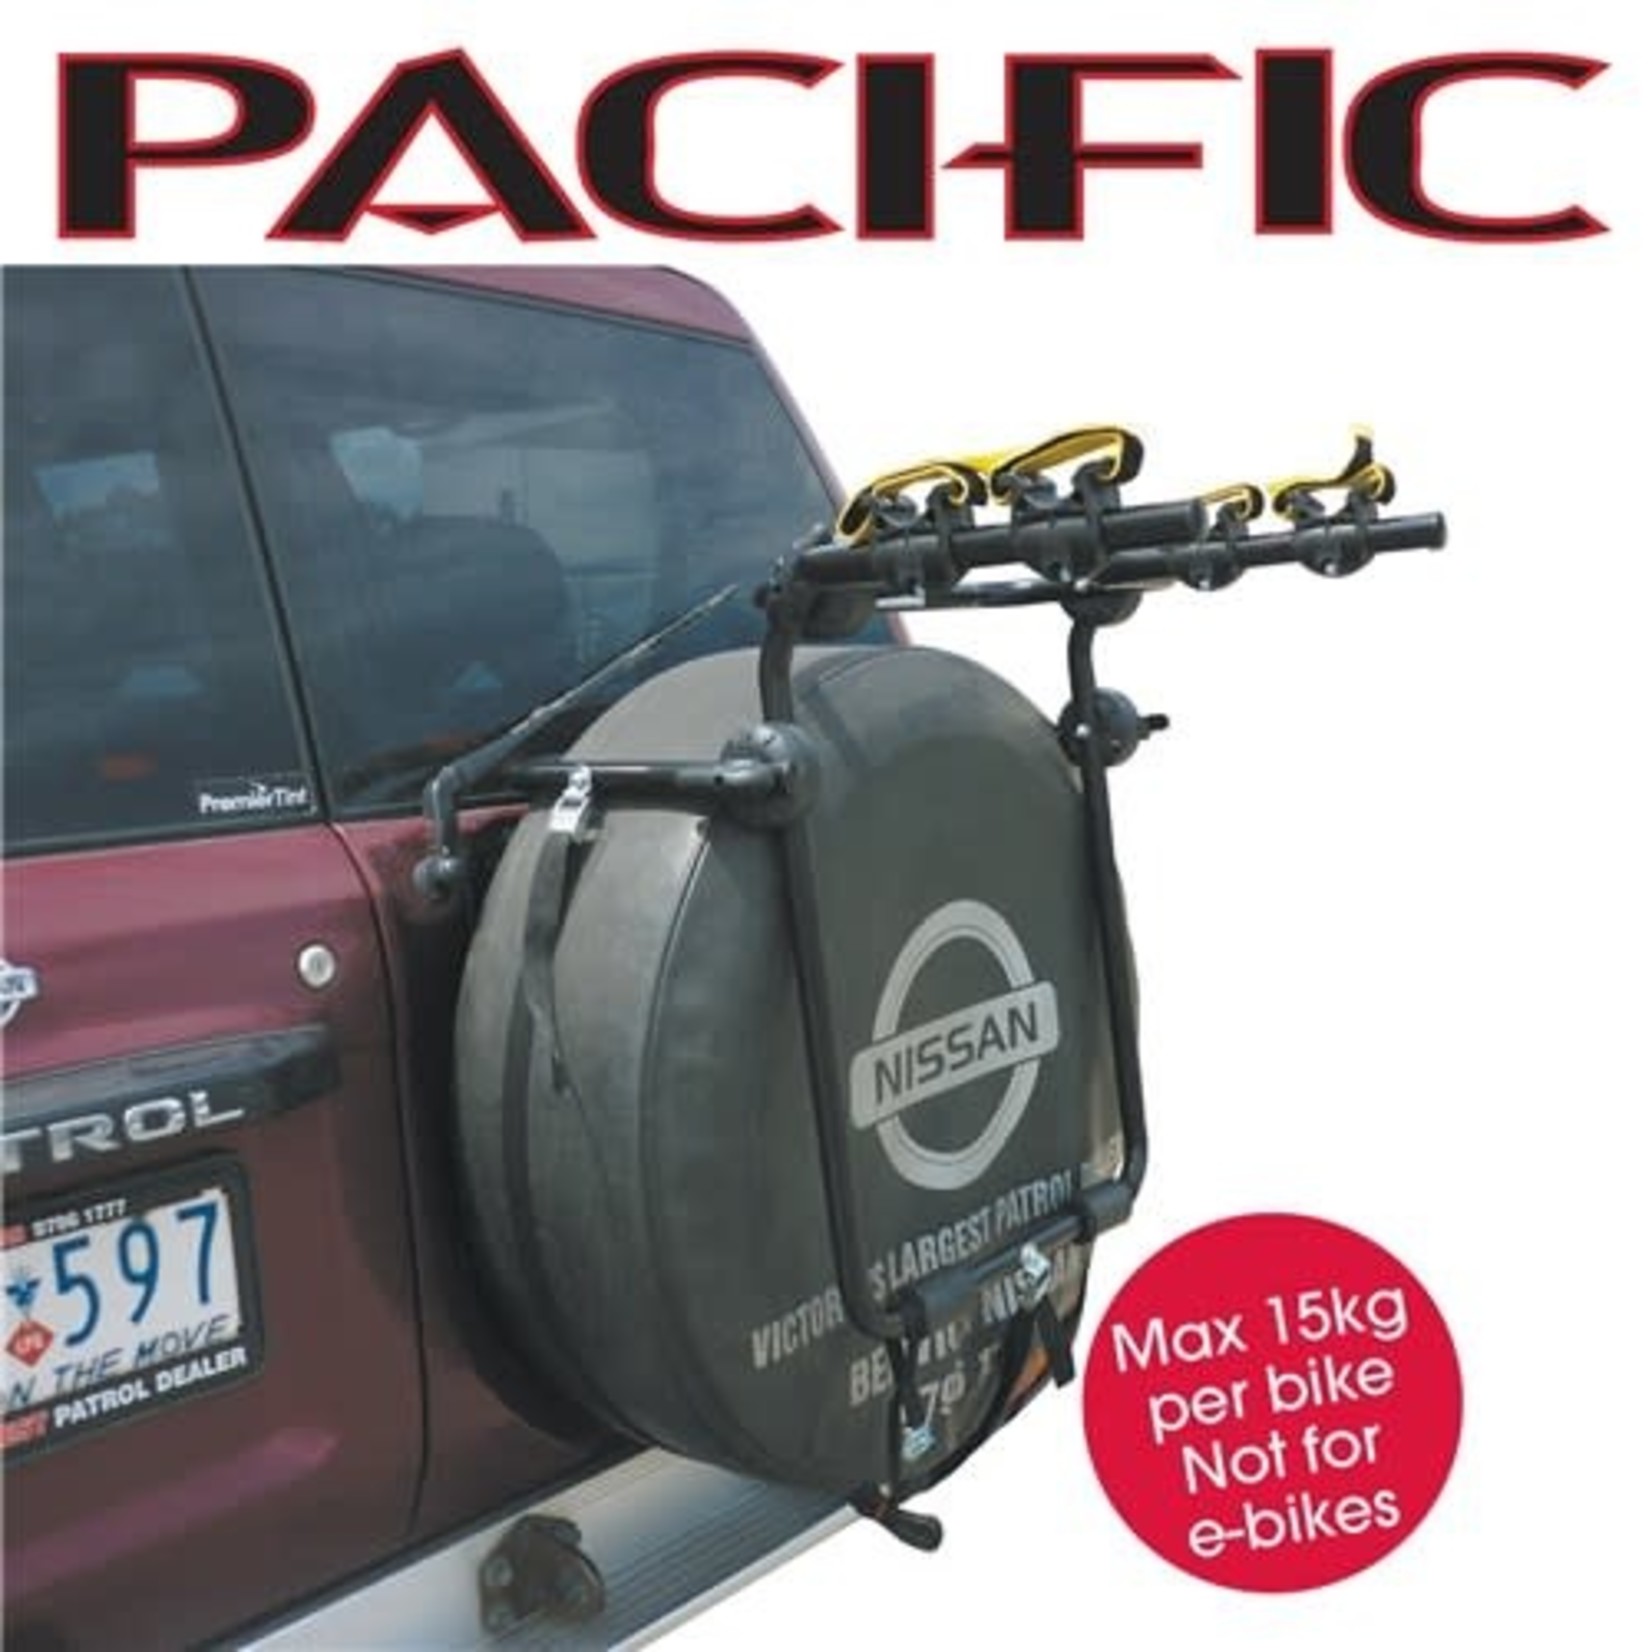 pacific Pacific 2 Bike Rear Spare Tyre Carrier Rack-Maximum 15kg Per Bike Not For E-Bike